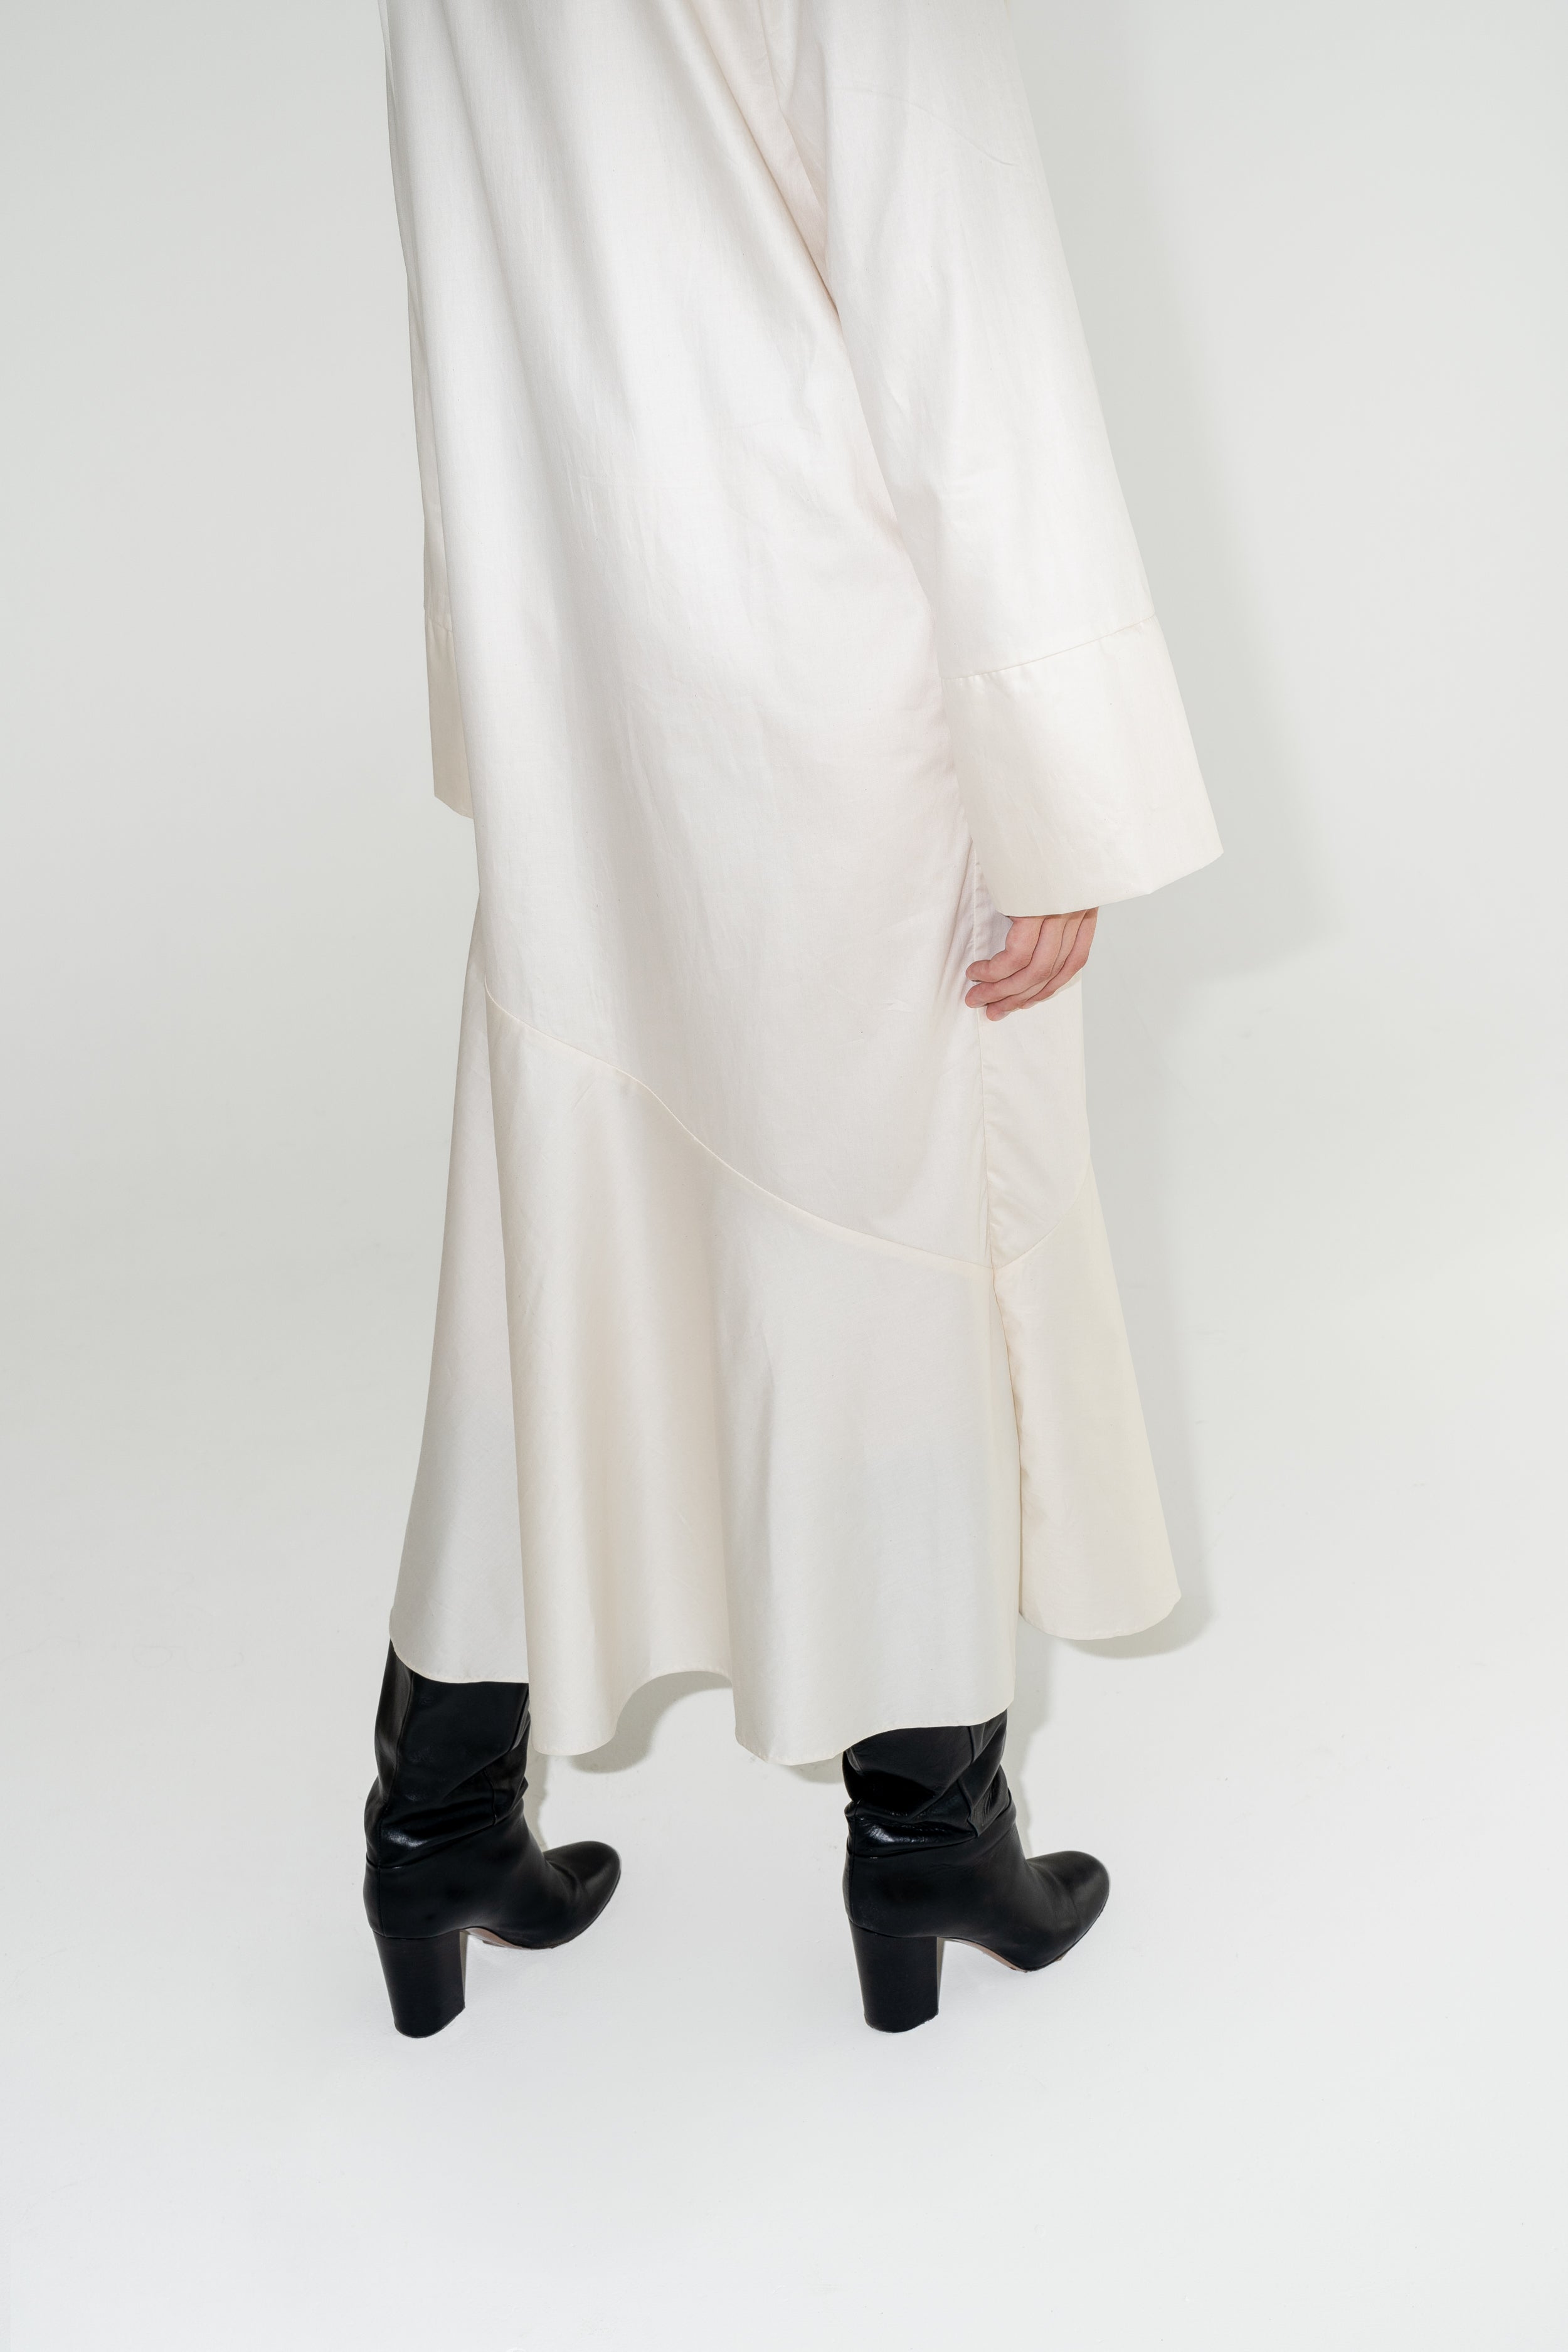 Dámské bílé dlouhé šaty z organické bavlny s výraznými černými koženými botami.